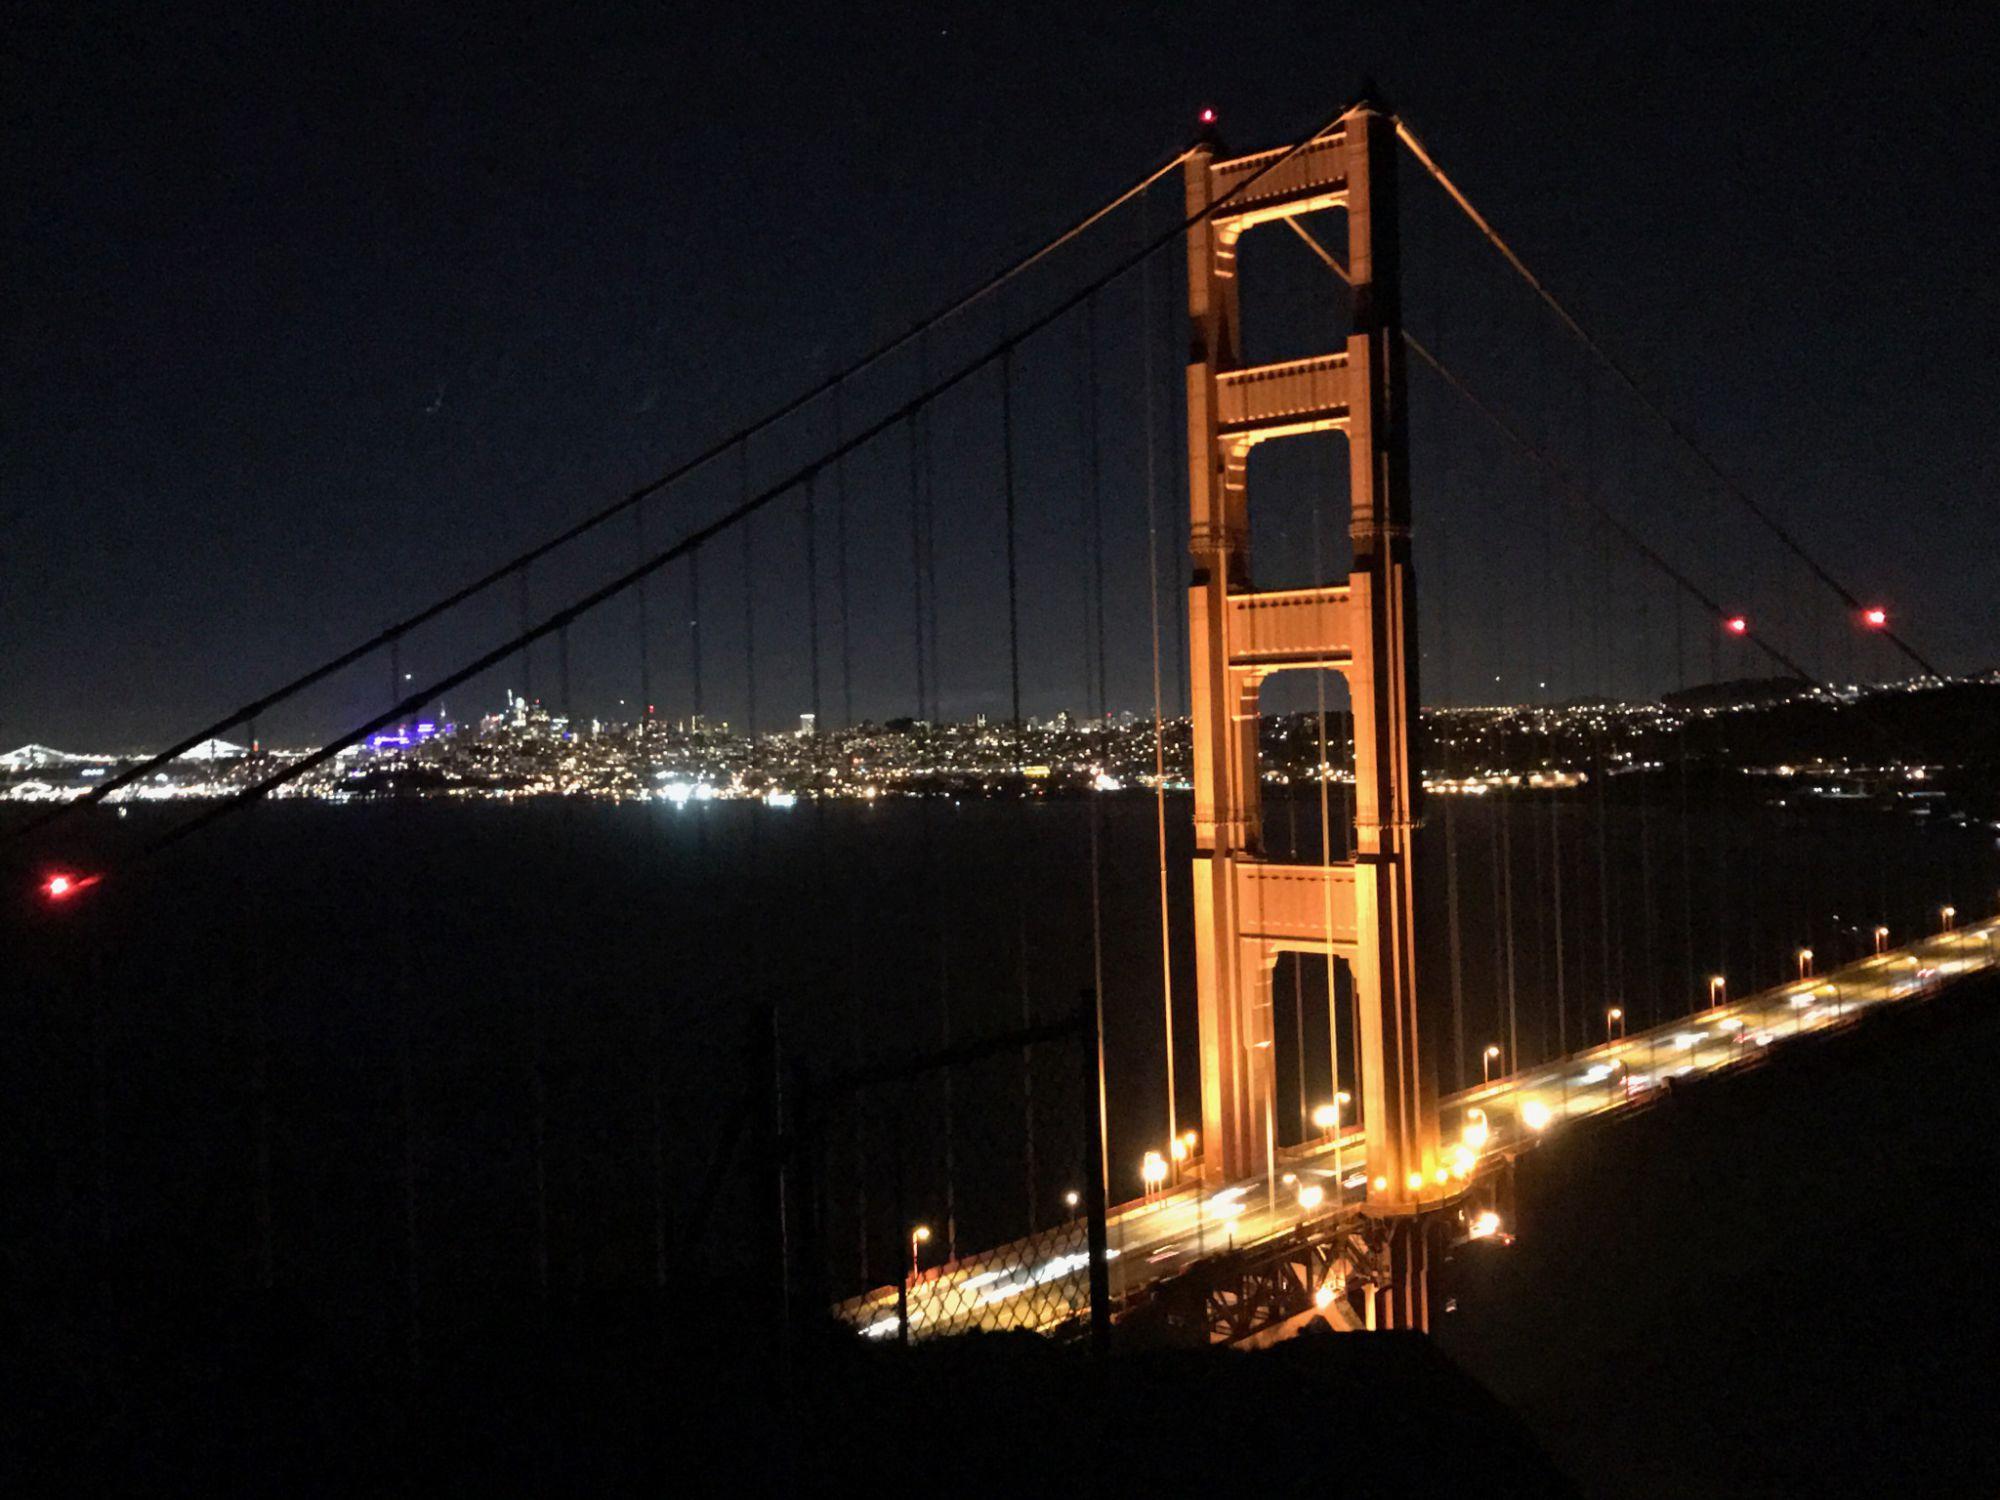 Photo of Golden Gate Bridge taken with iPhone 7